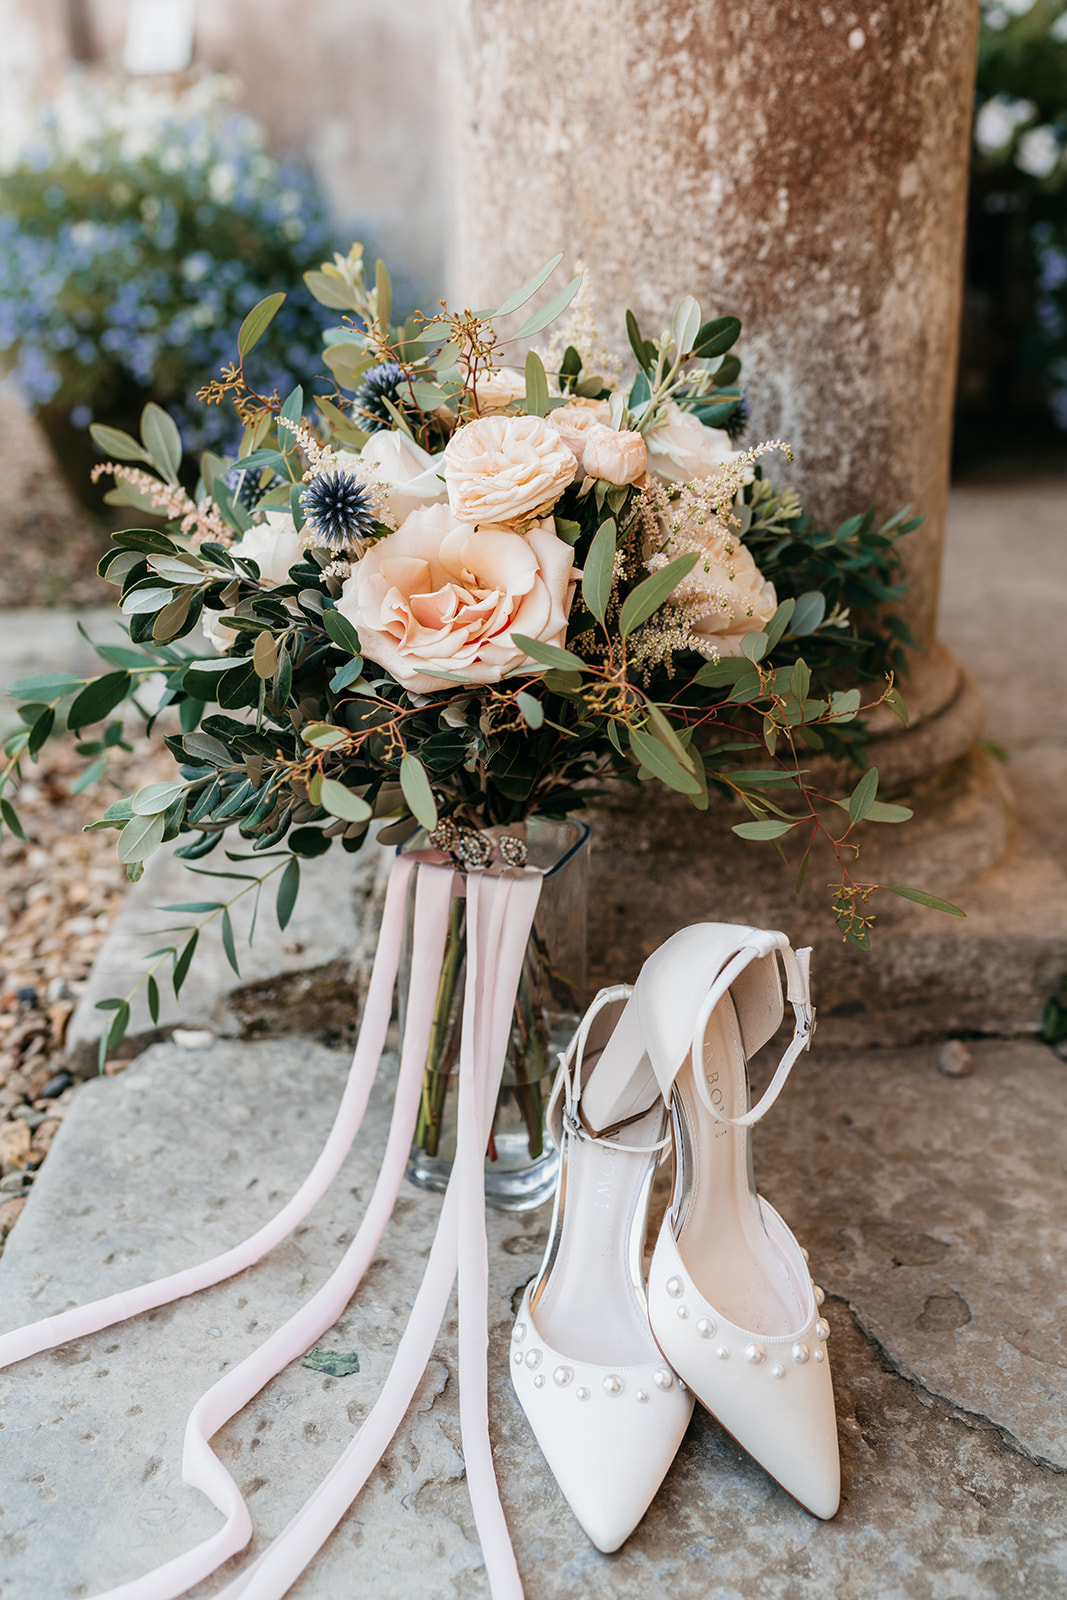 Wedding details, brides wedding shoes and wedding bouquet